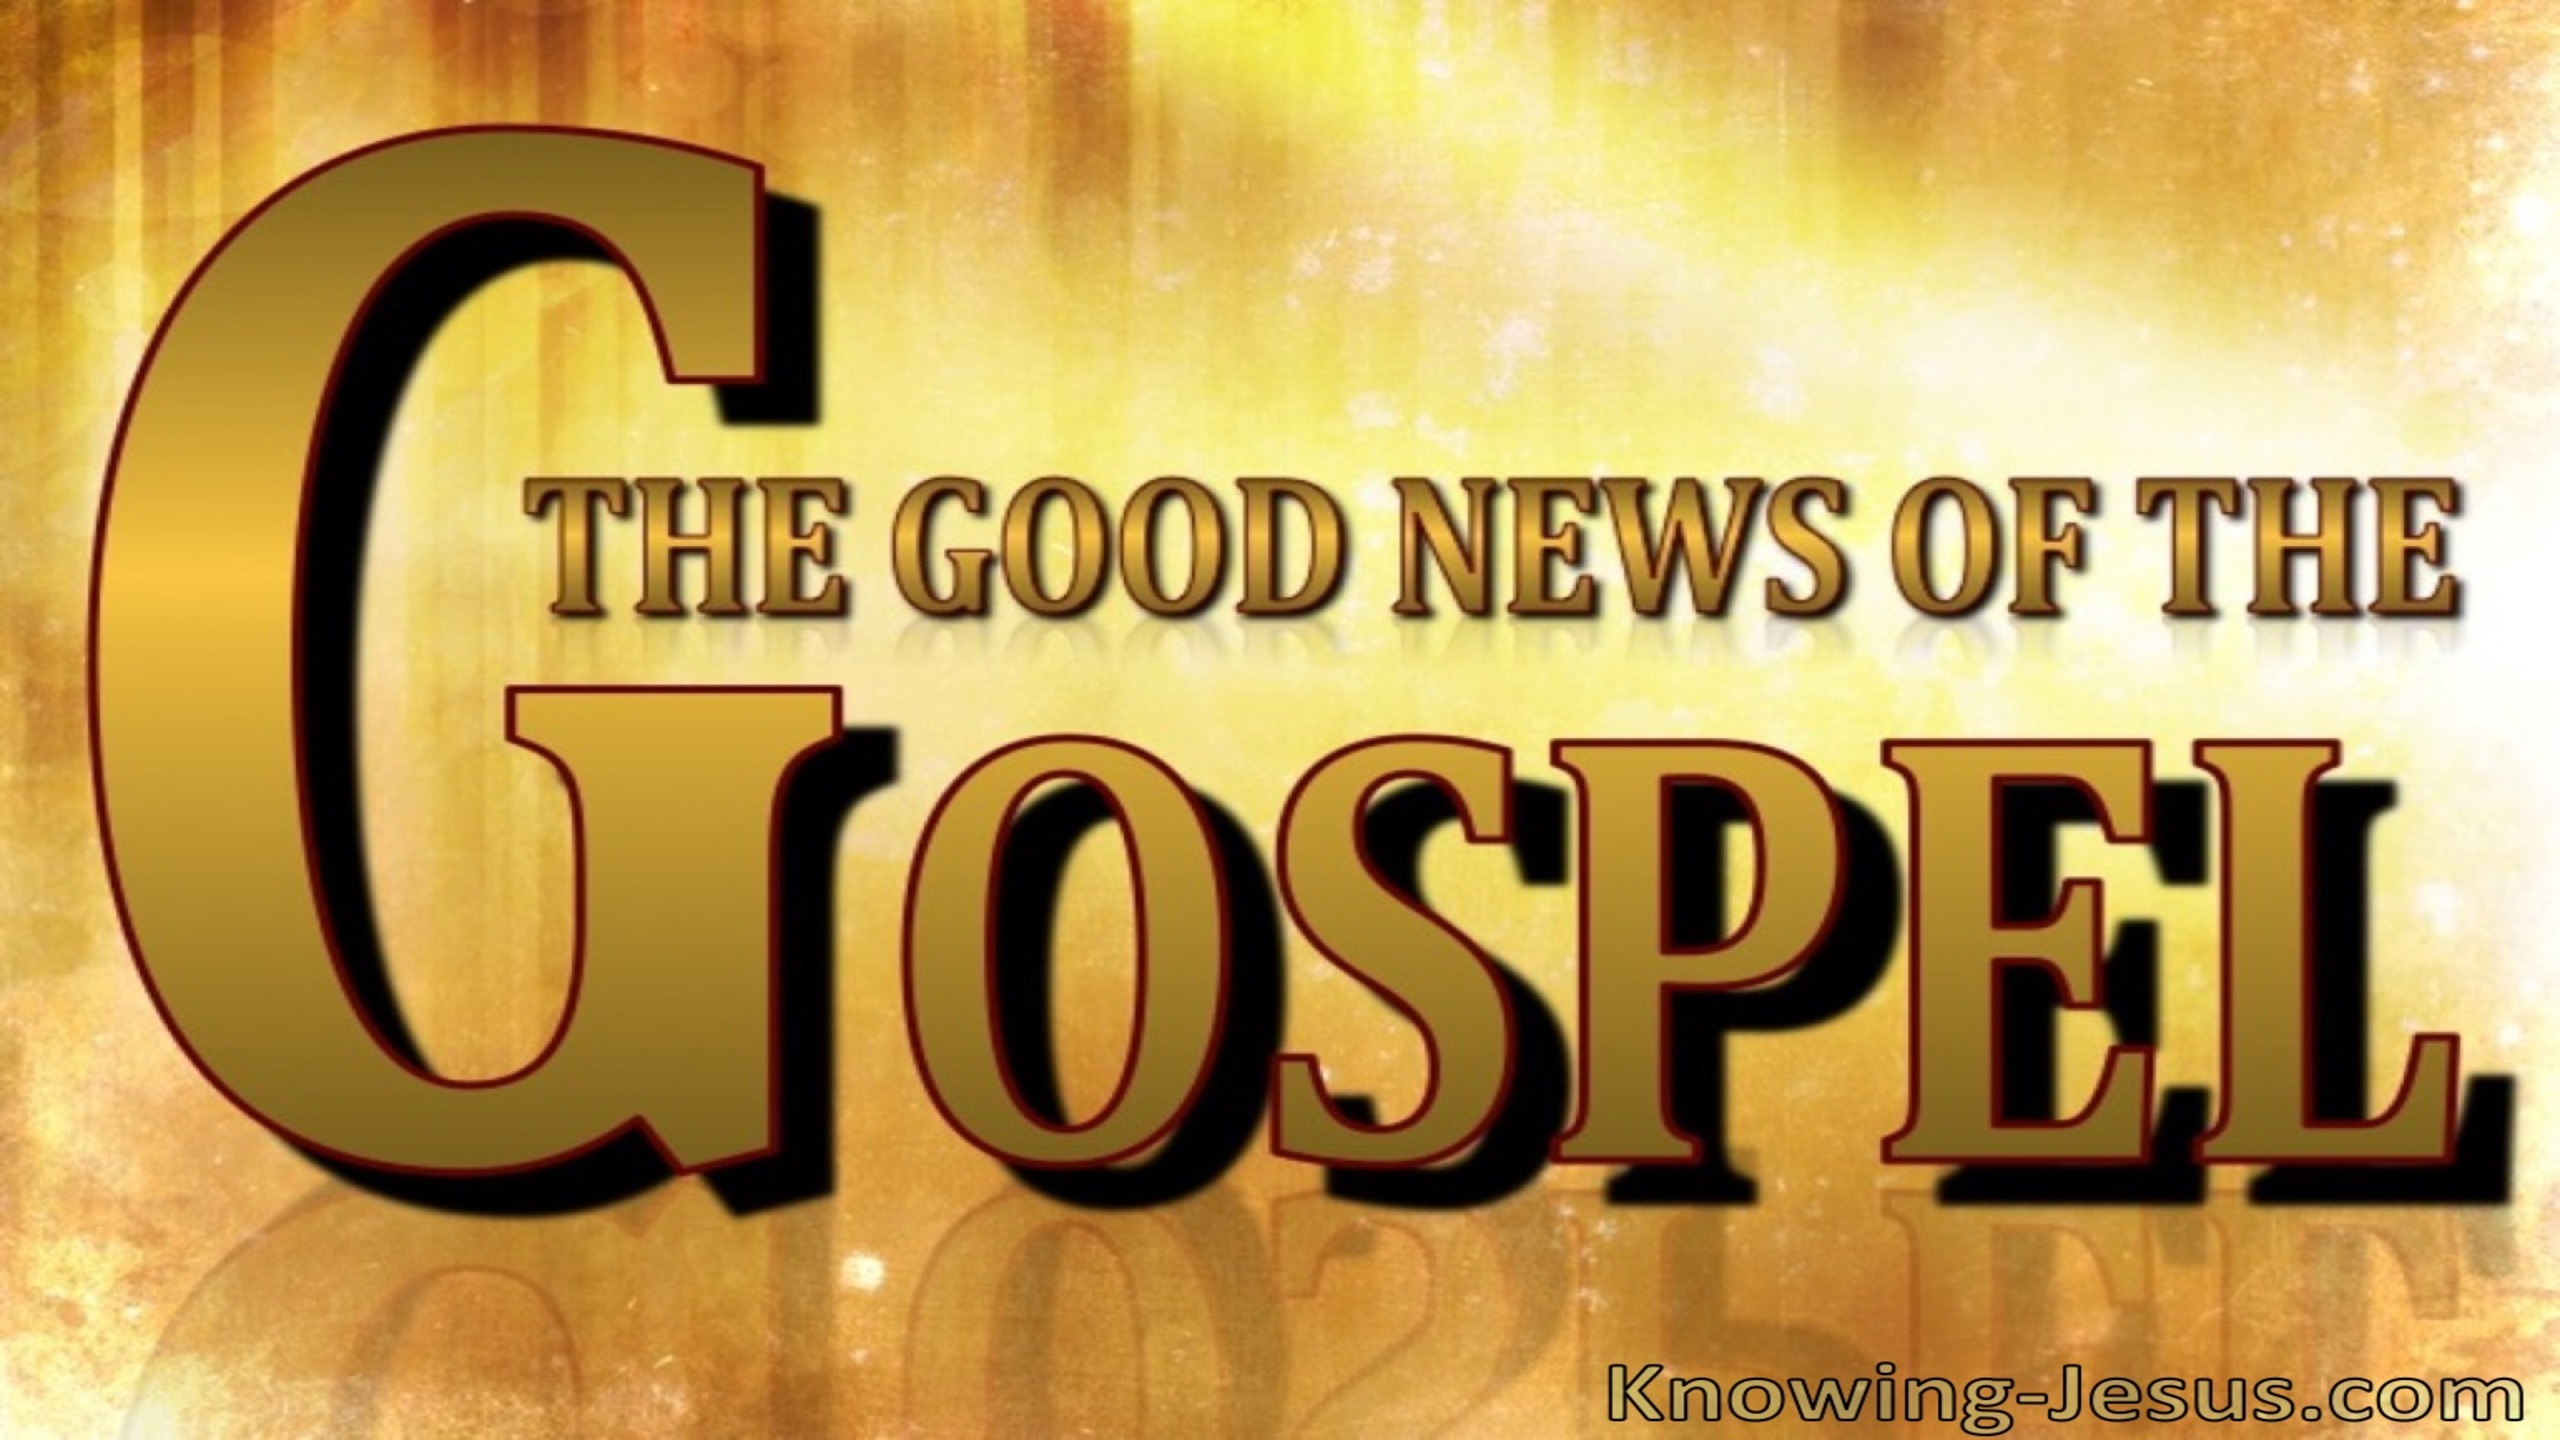 The Good News of the Gospel (devotional)10-01 (yellow)